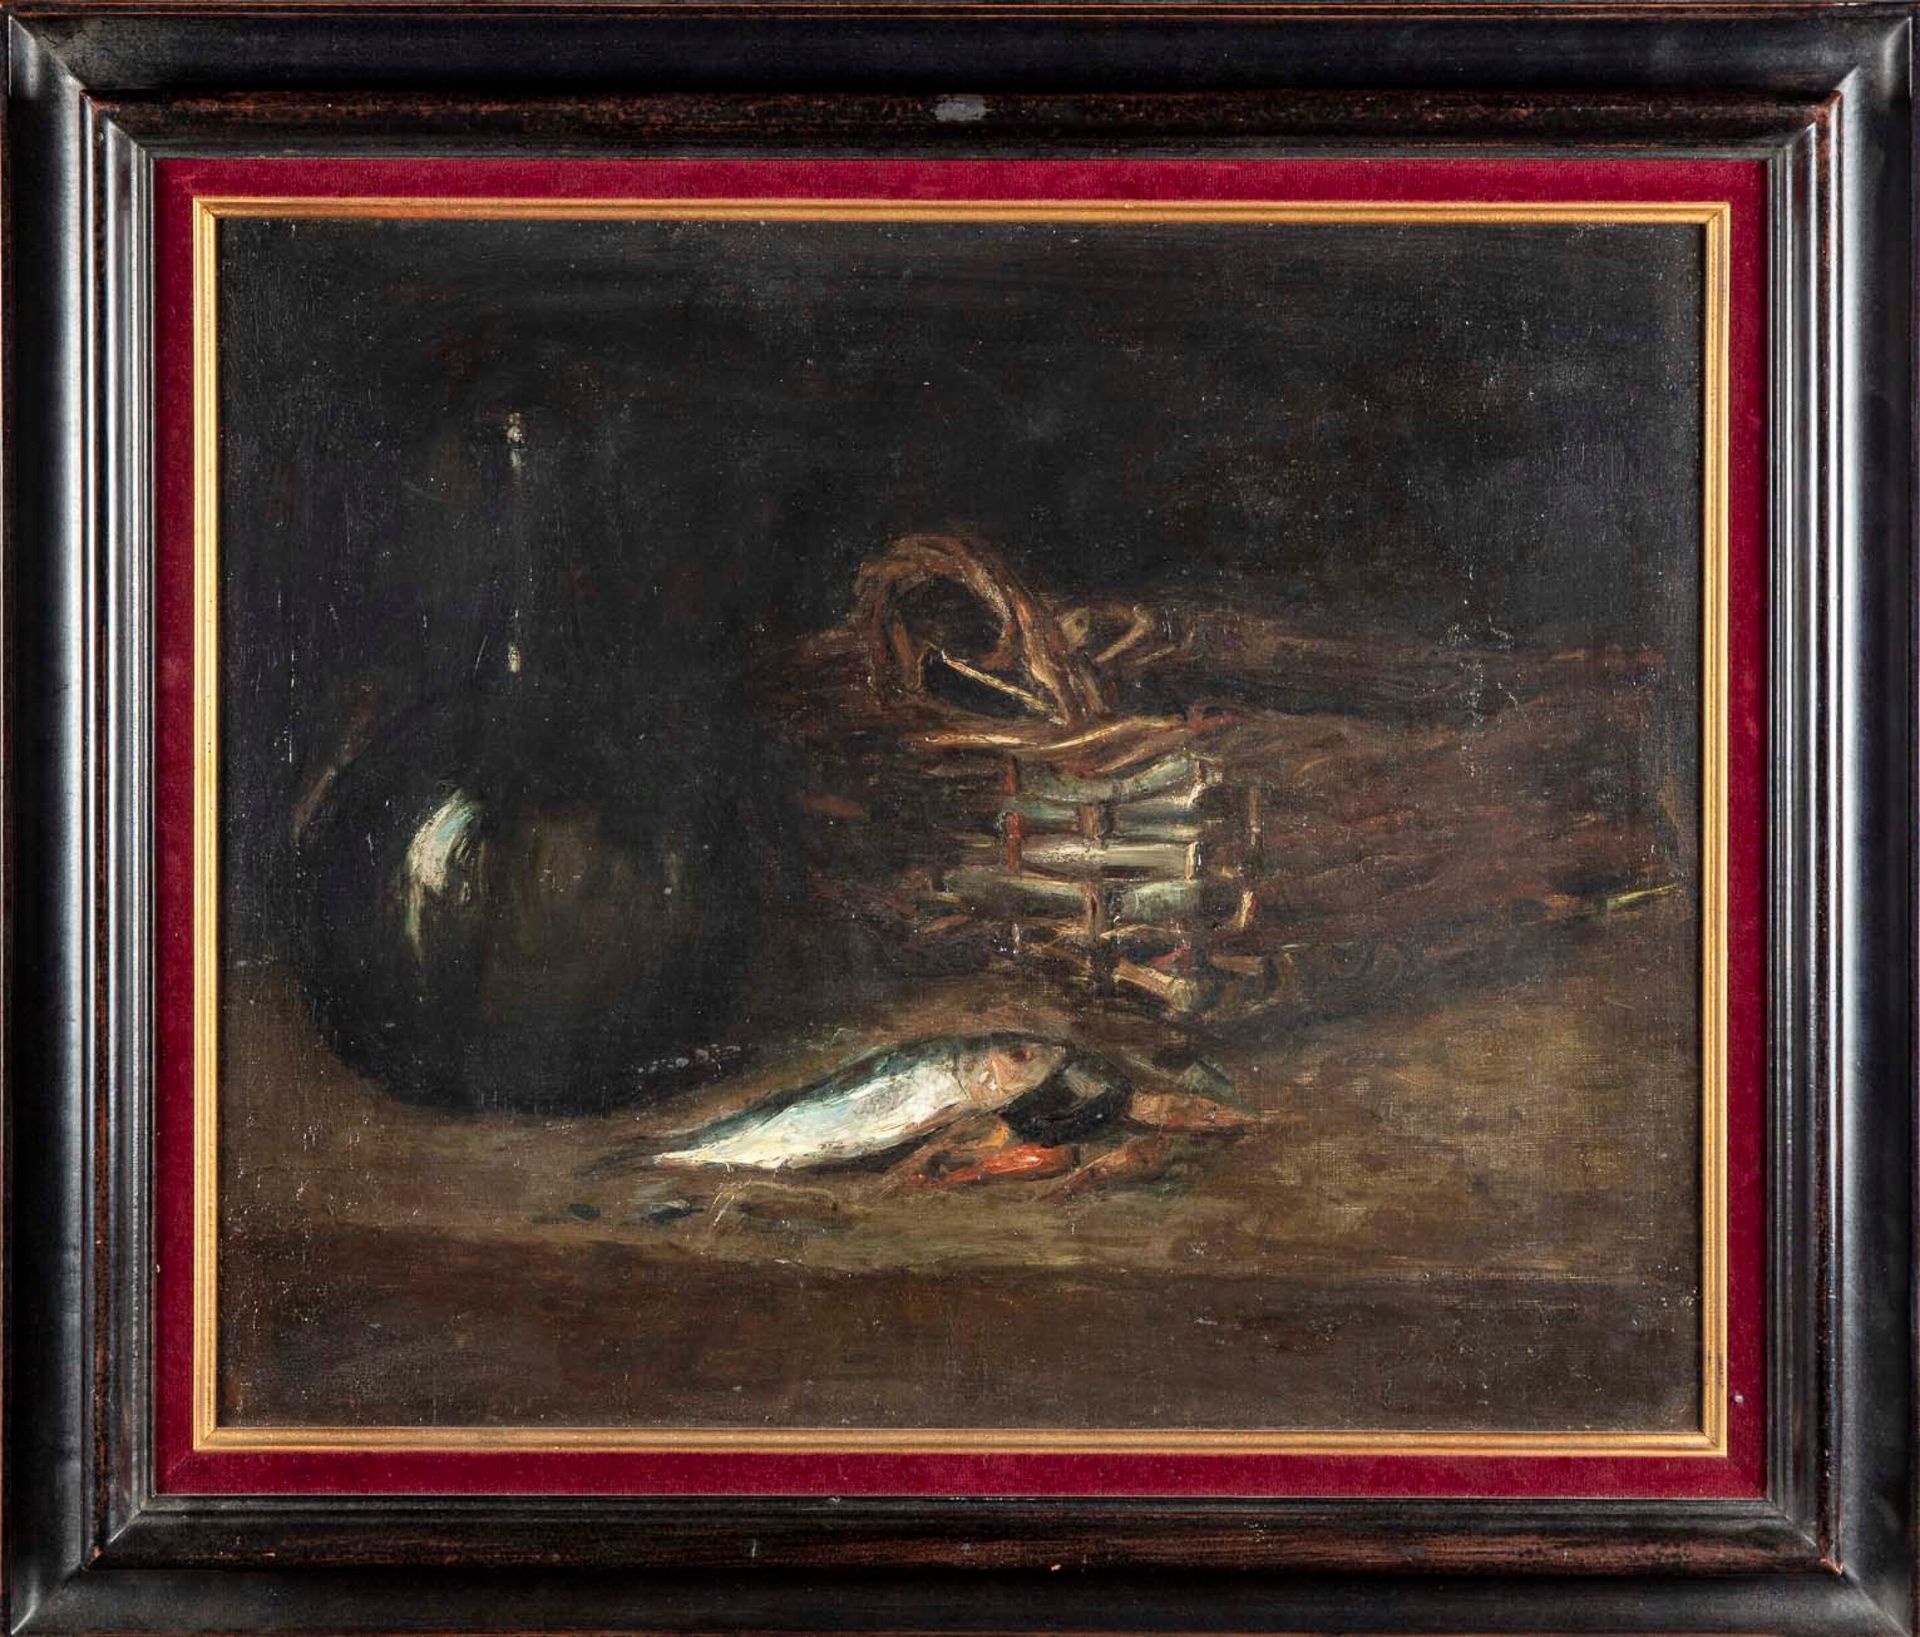 GERMAIN RIBAUT Germain RIBAUT (1845-1893)

Bodegón con sardinas

Óleo sobre lien&hellip;